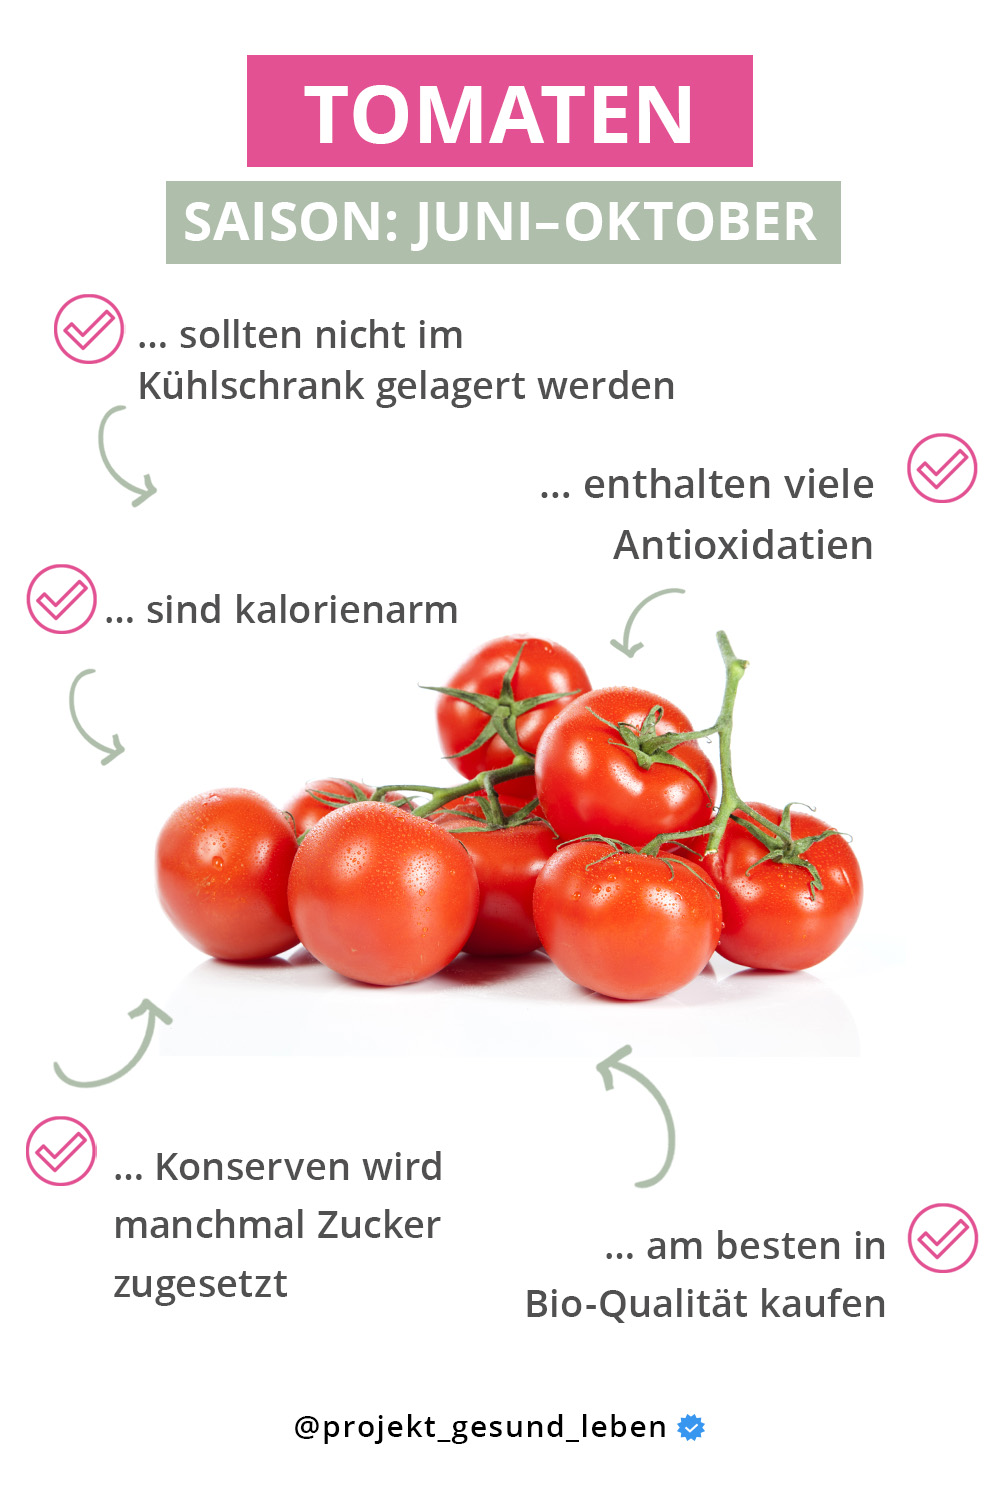 Warenkunde Tomaten Pinterest